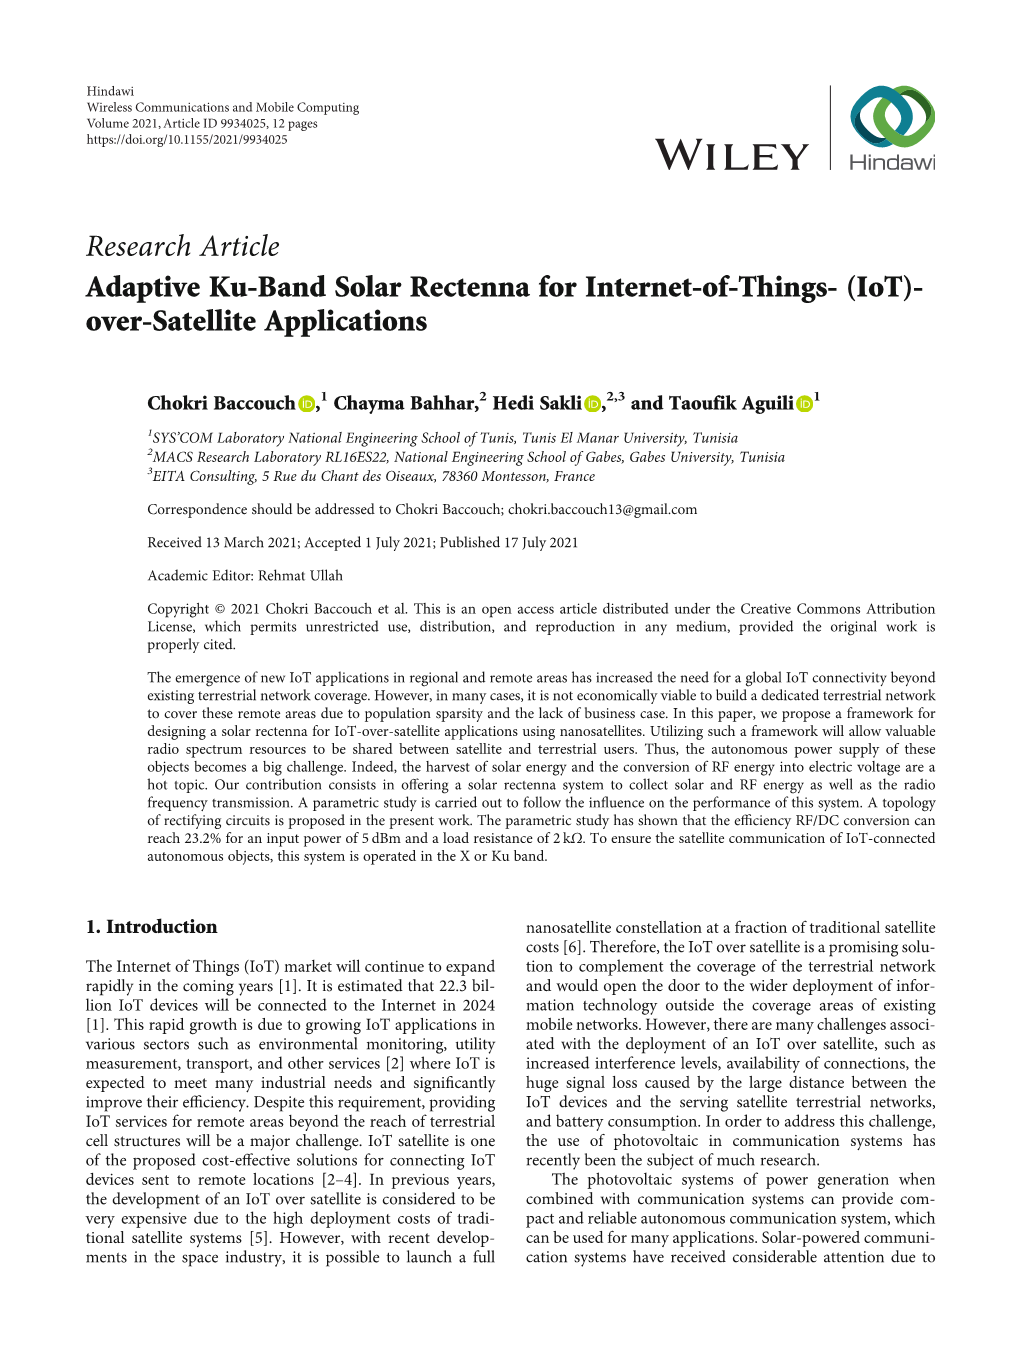 Adaptive Ku-Band Solar Rectenna for Internet-Of-Things-(Iot)-Over